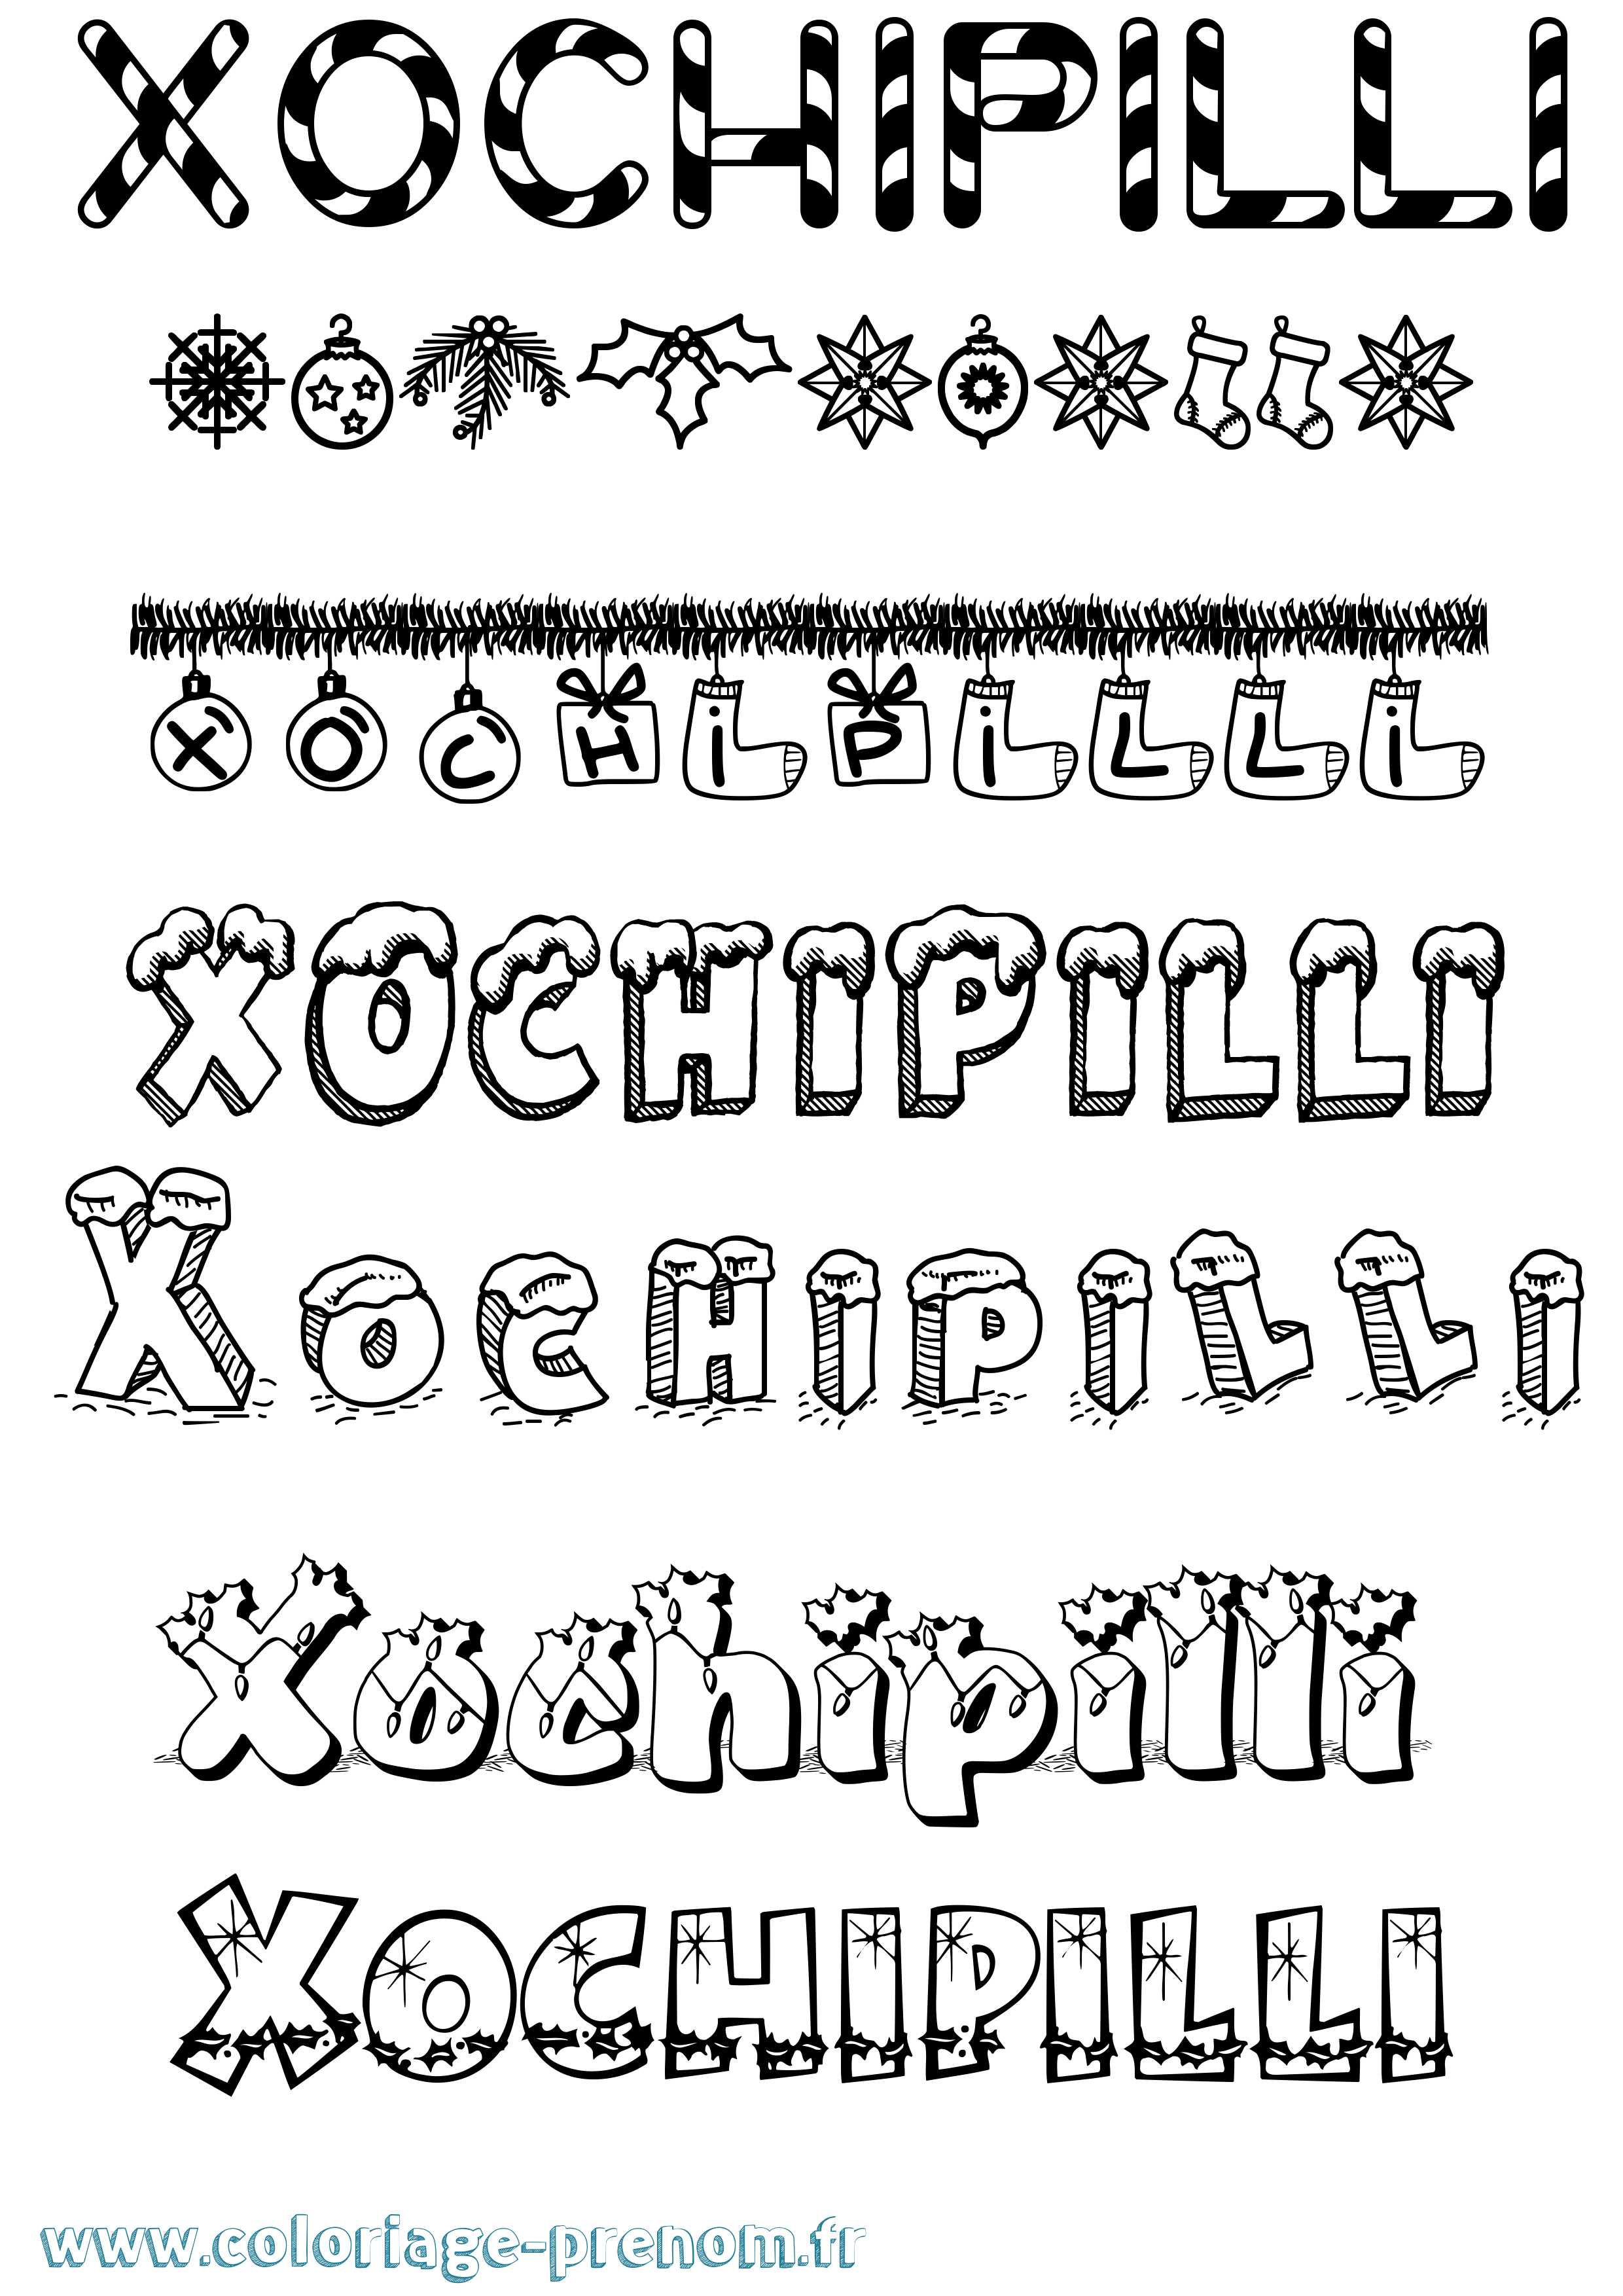 Coloriage prénom Xochipilli Noël